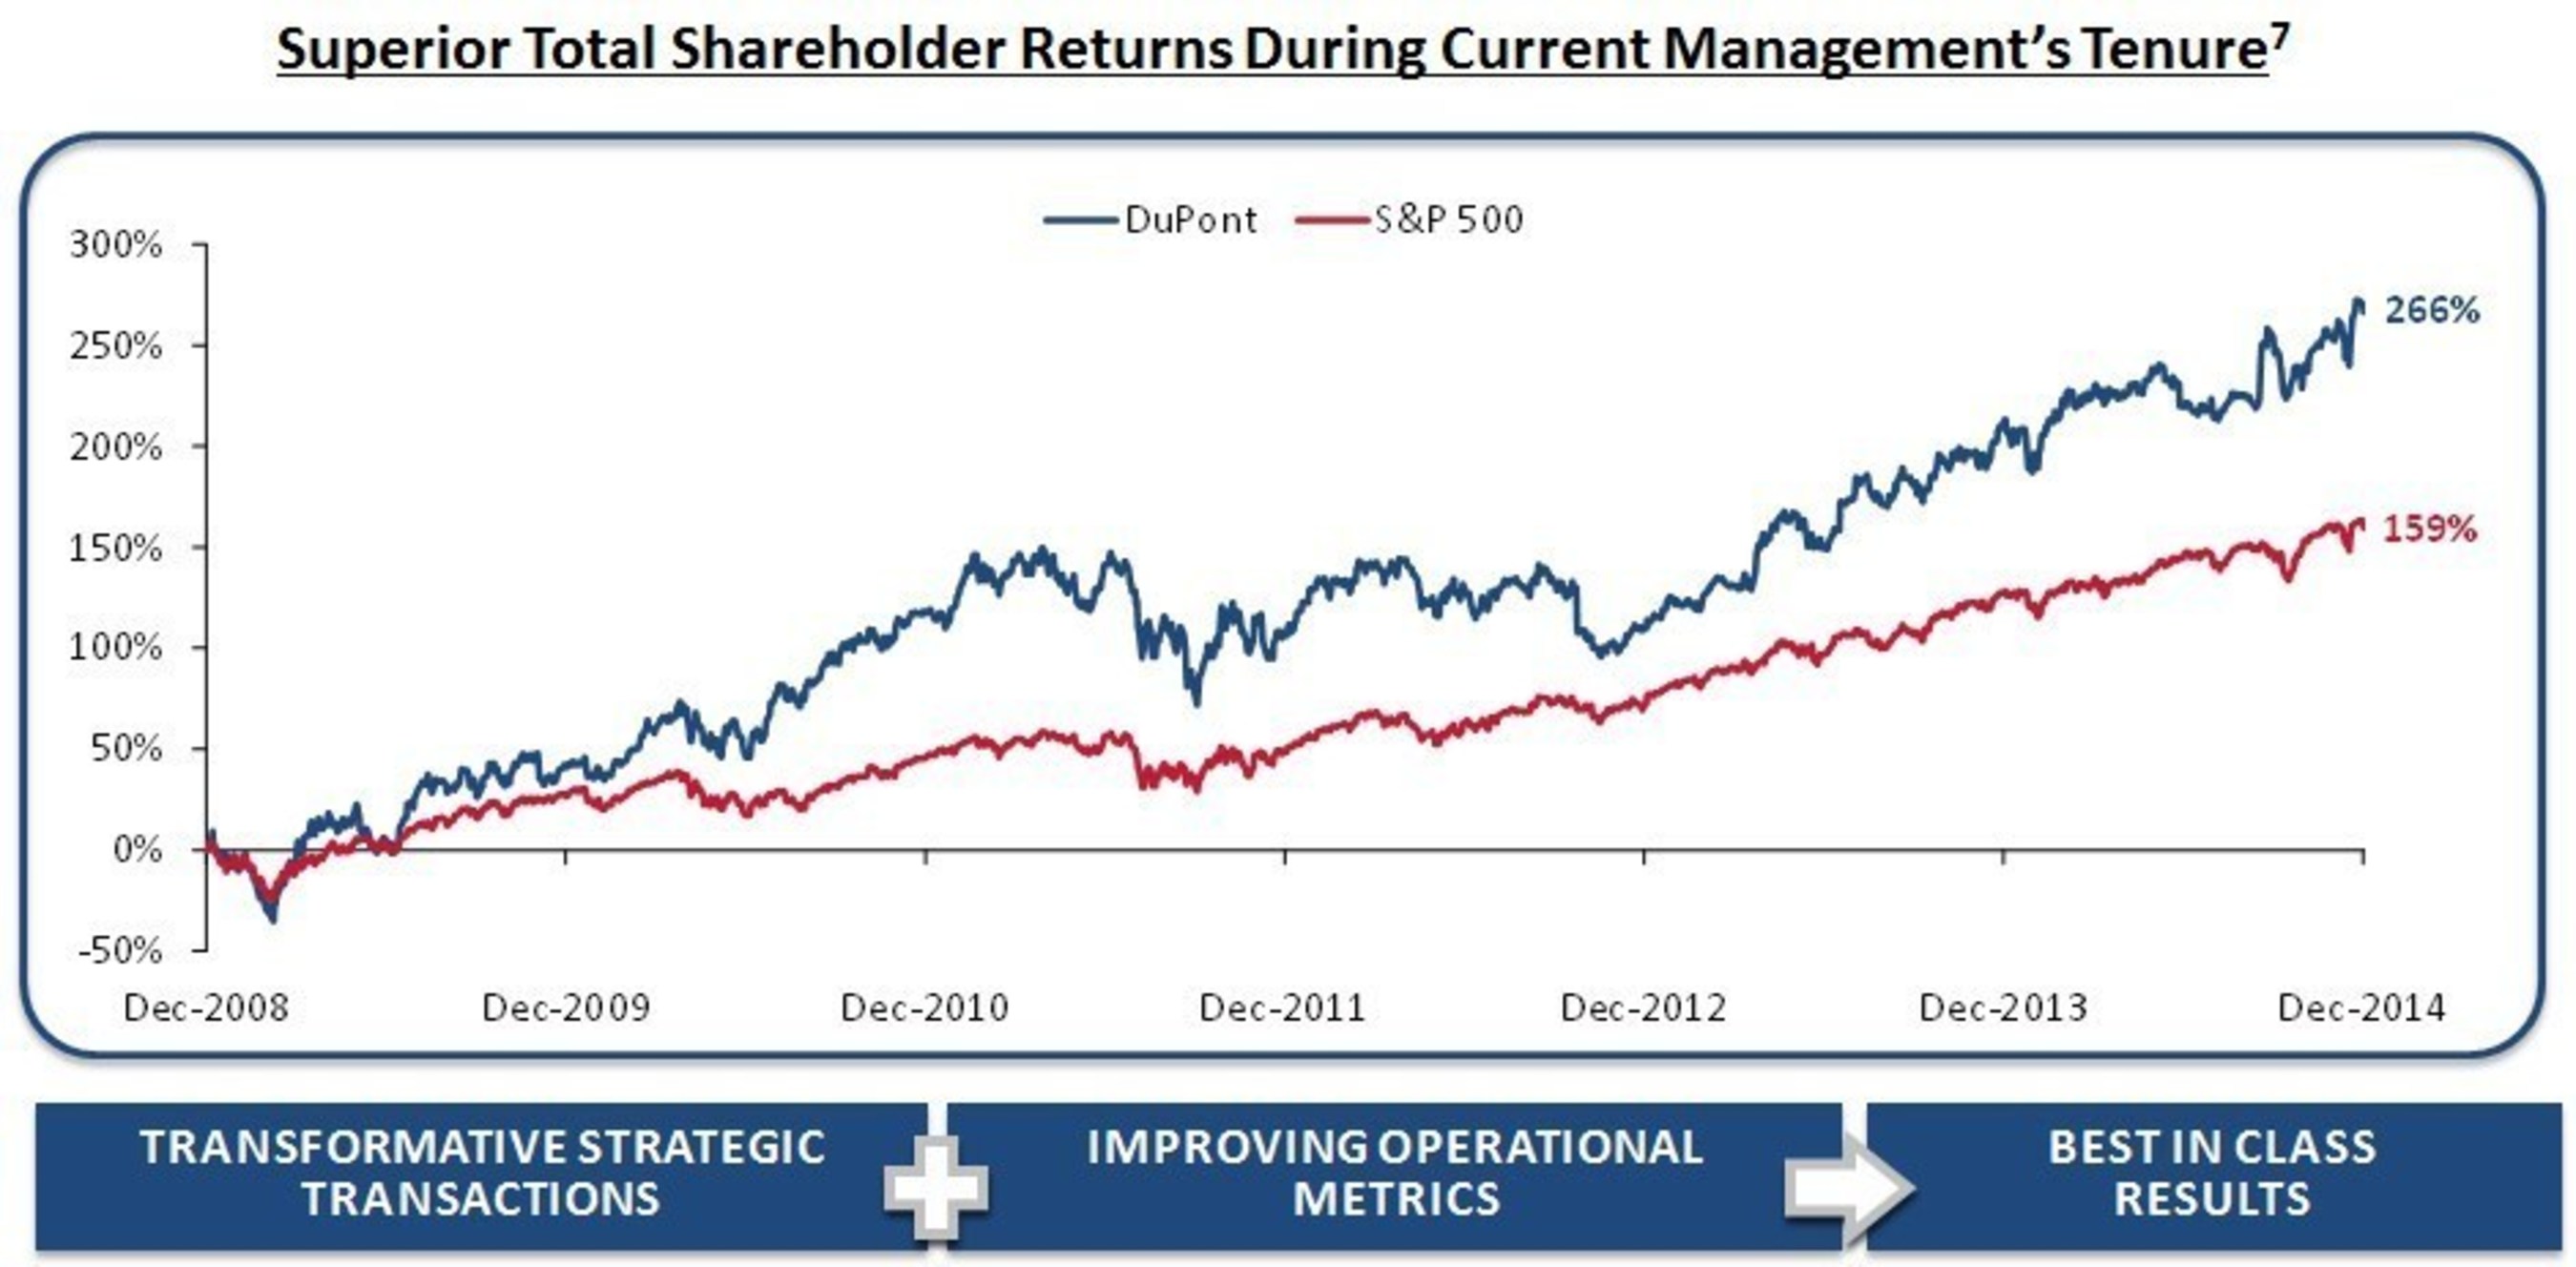 Superior Total Shareholder Returns During Current Management's Tenure